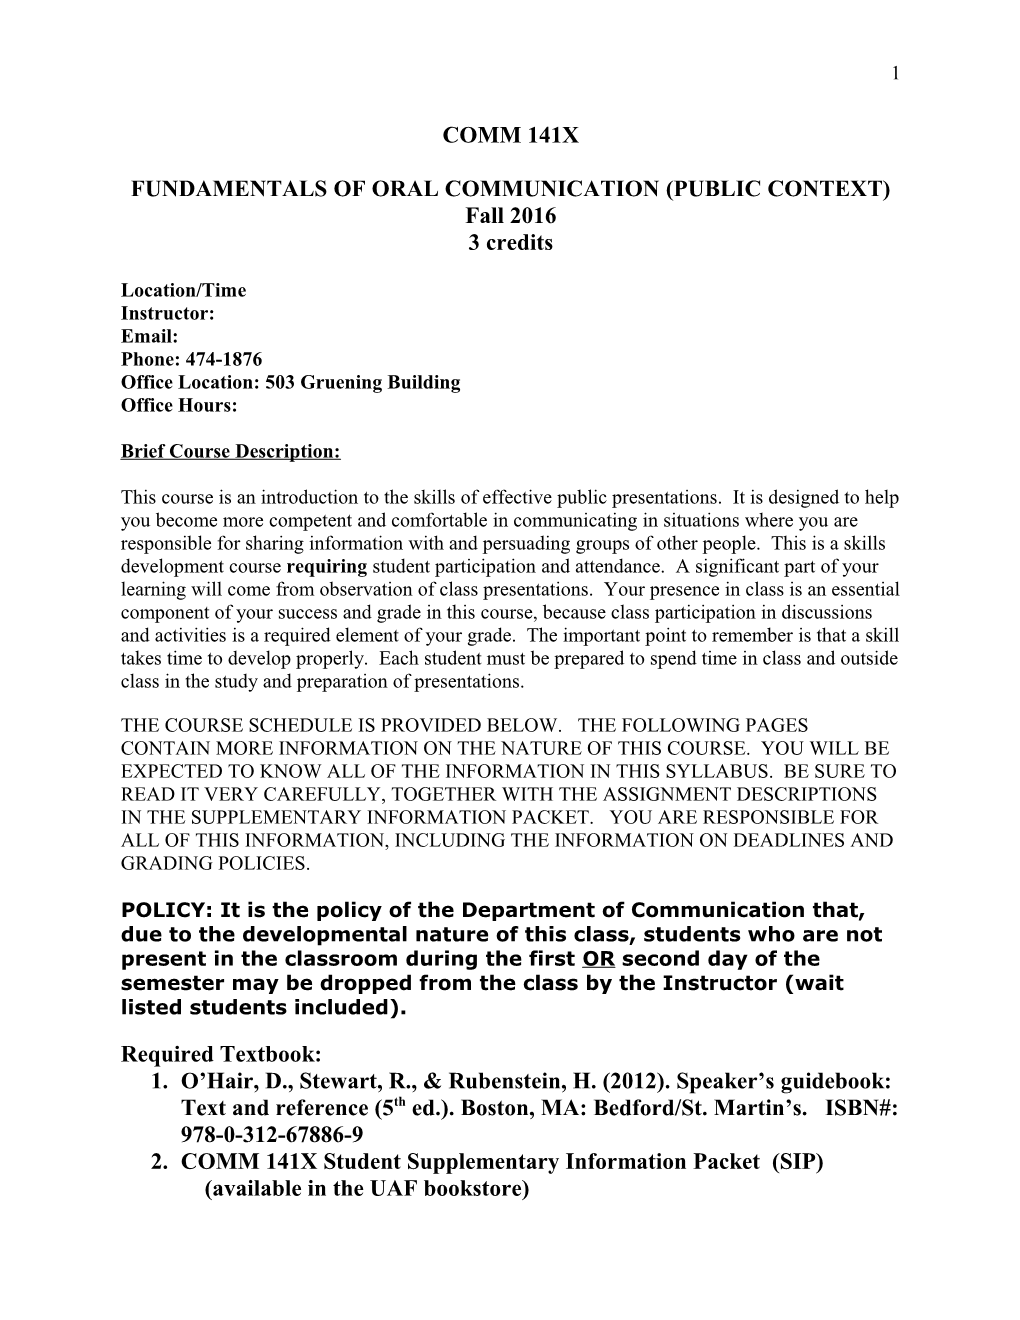 Communication 141X Fundamentals of Oral Communication (Public Context)